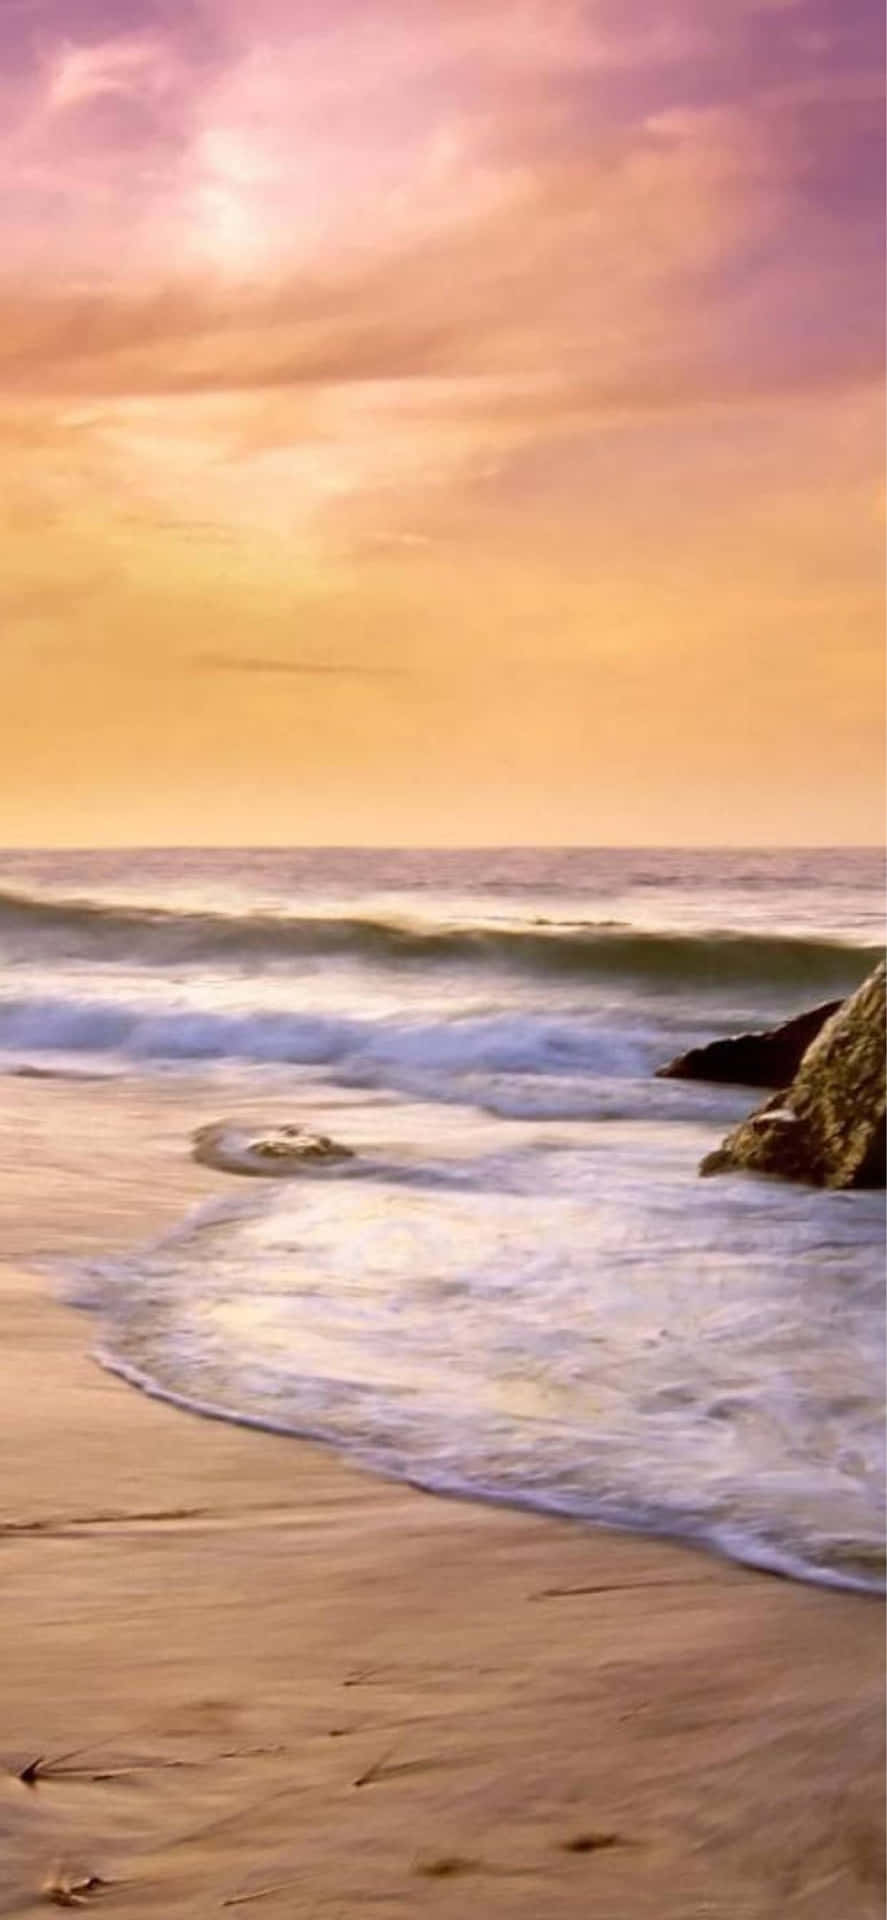 Iphonexs Max Malibu Ocean Side Sunset Sky Bakgrund